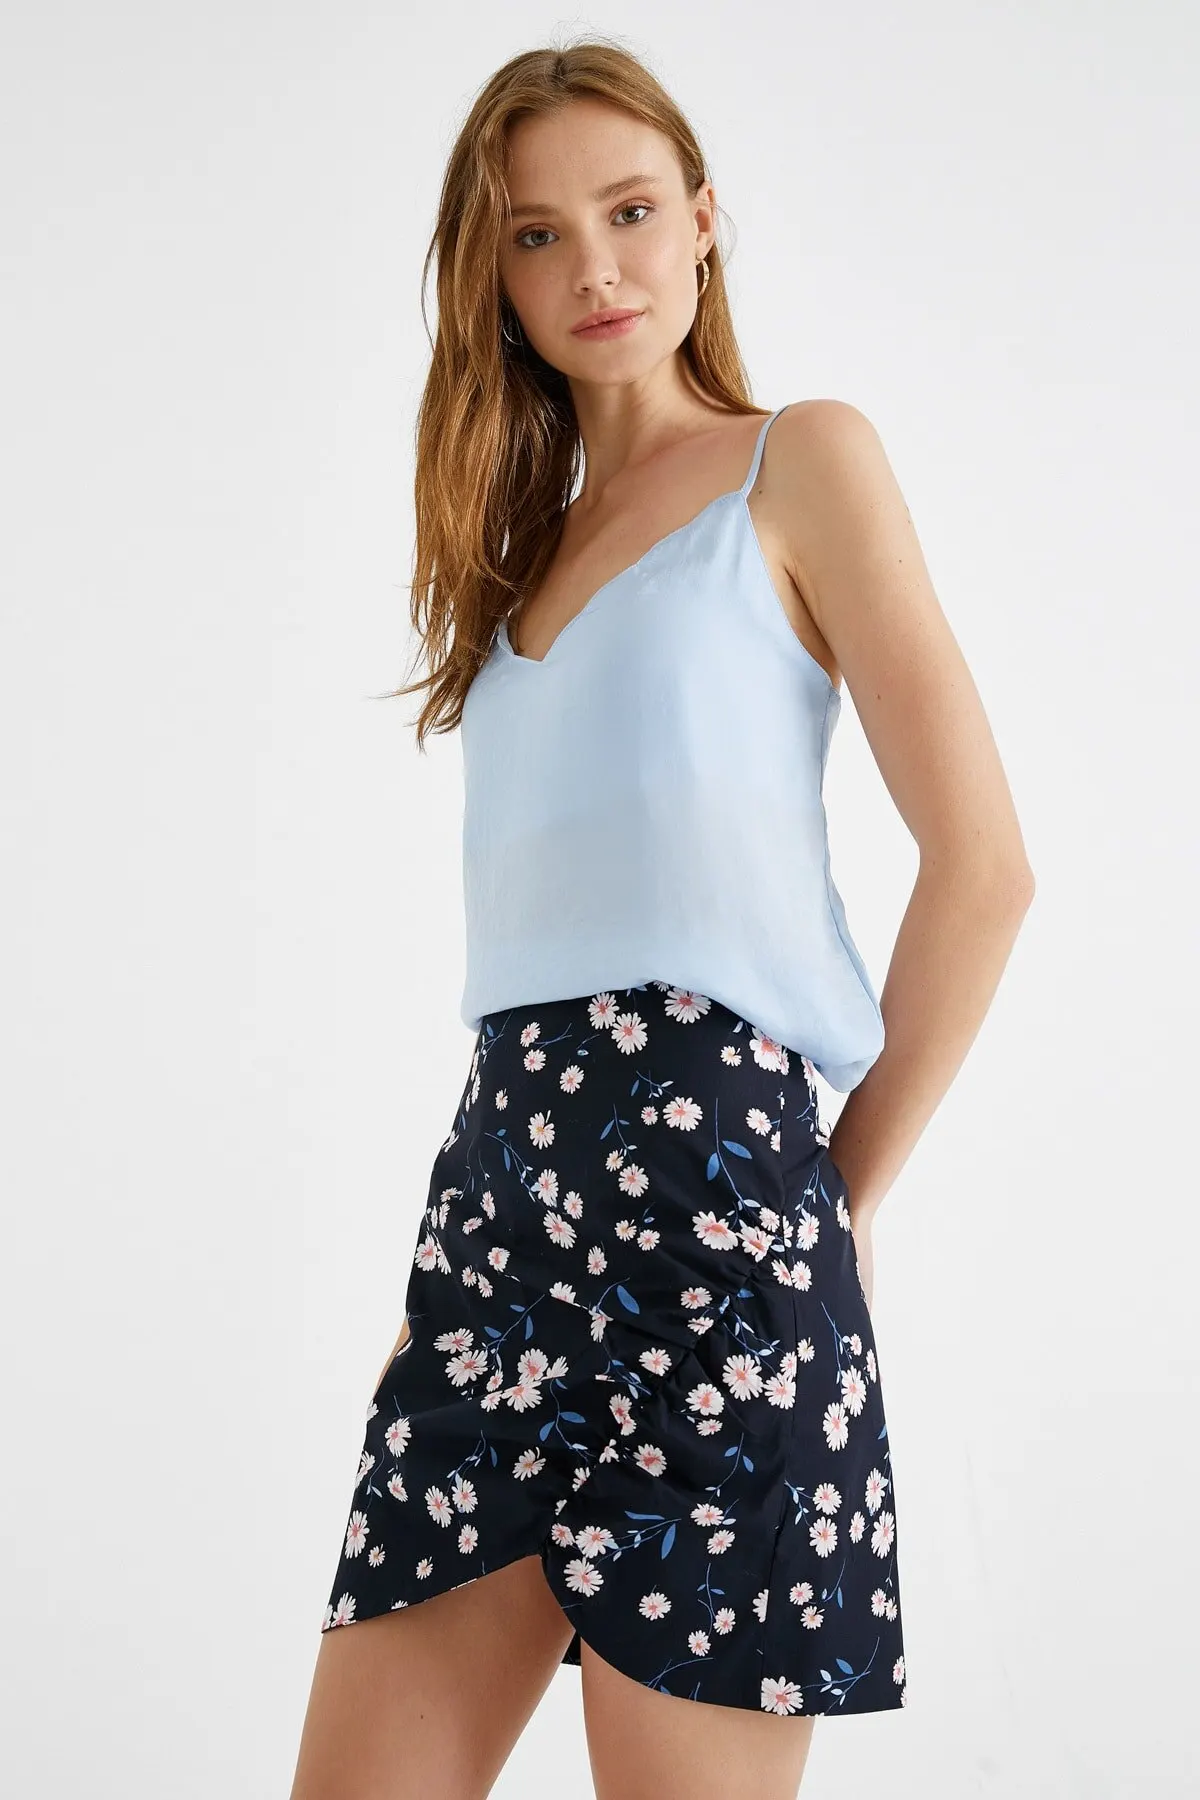 

Women's Skirt Ecru pattern Summer Cute Style Empire Slim Folds Above Knee Sexy Mini Skirts